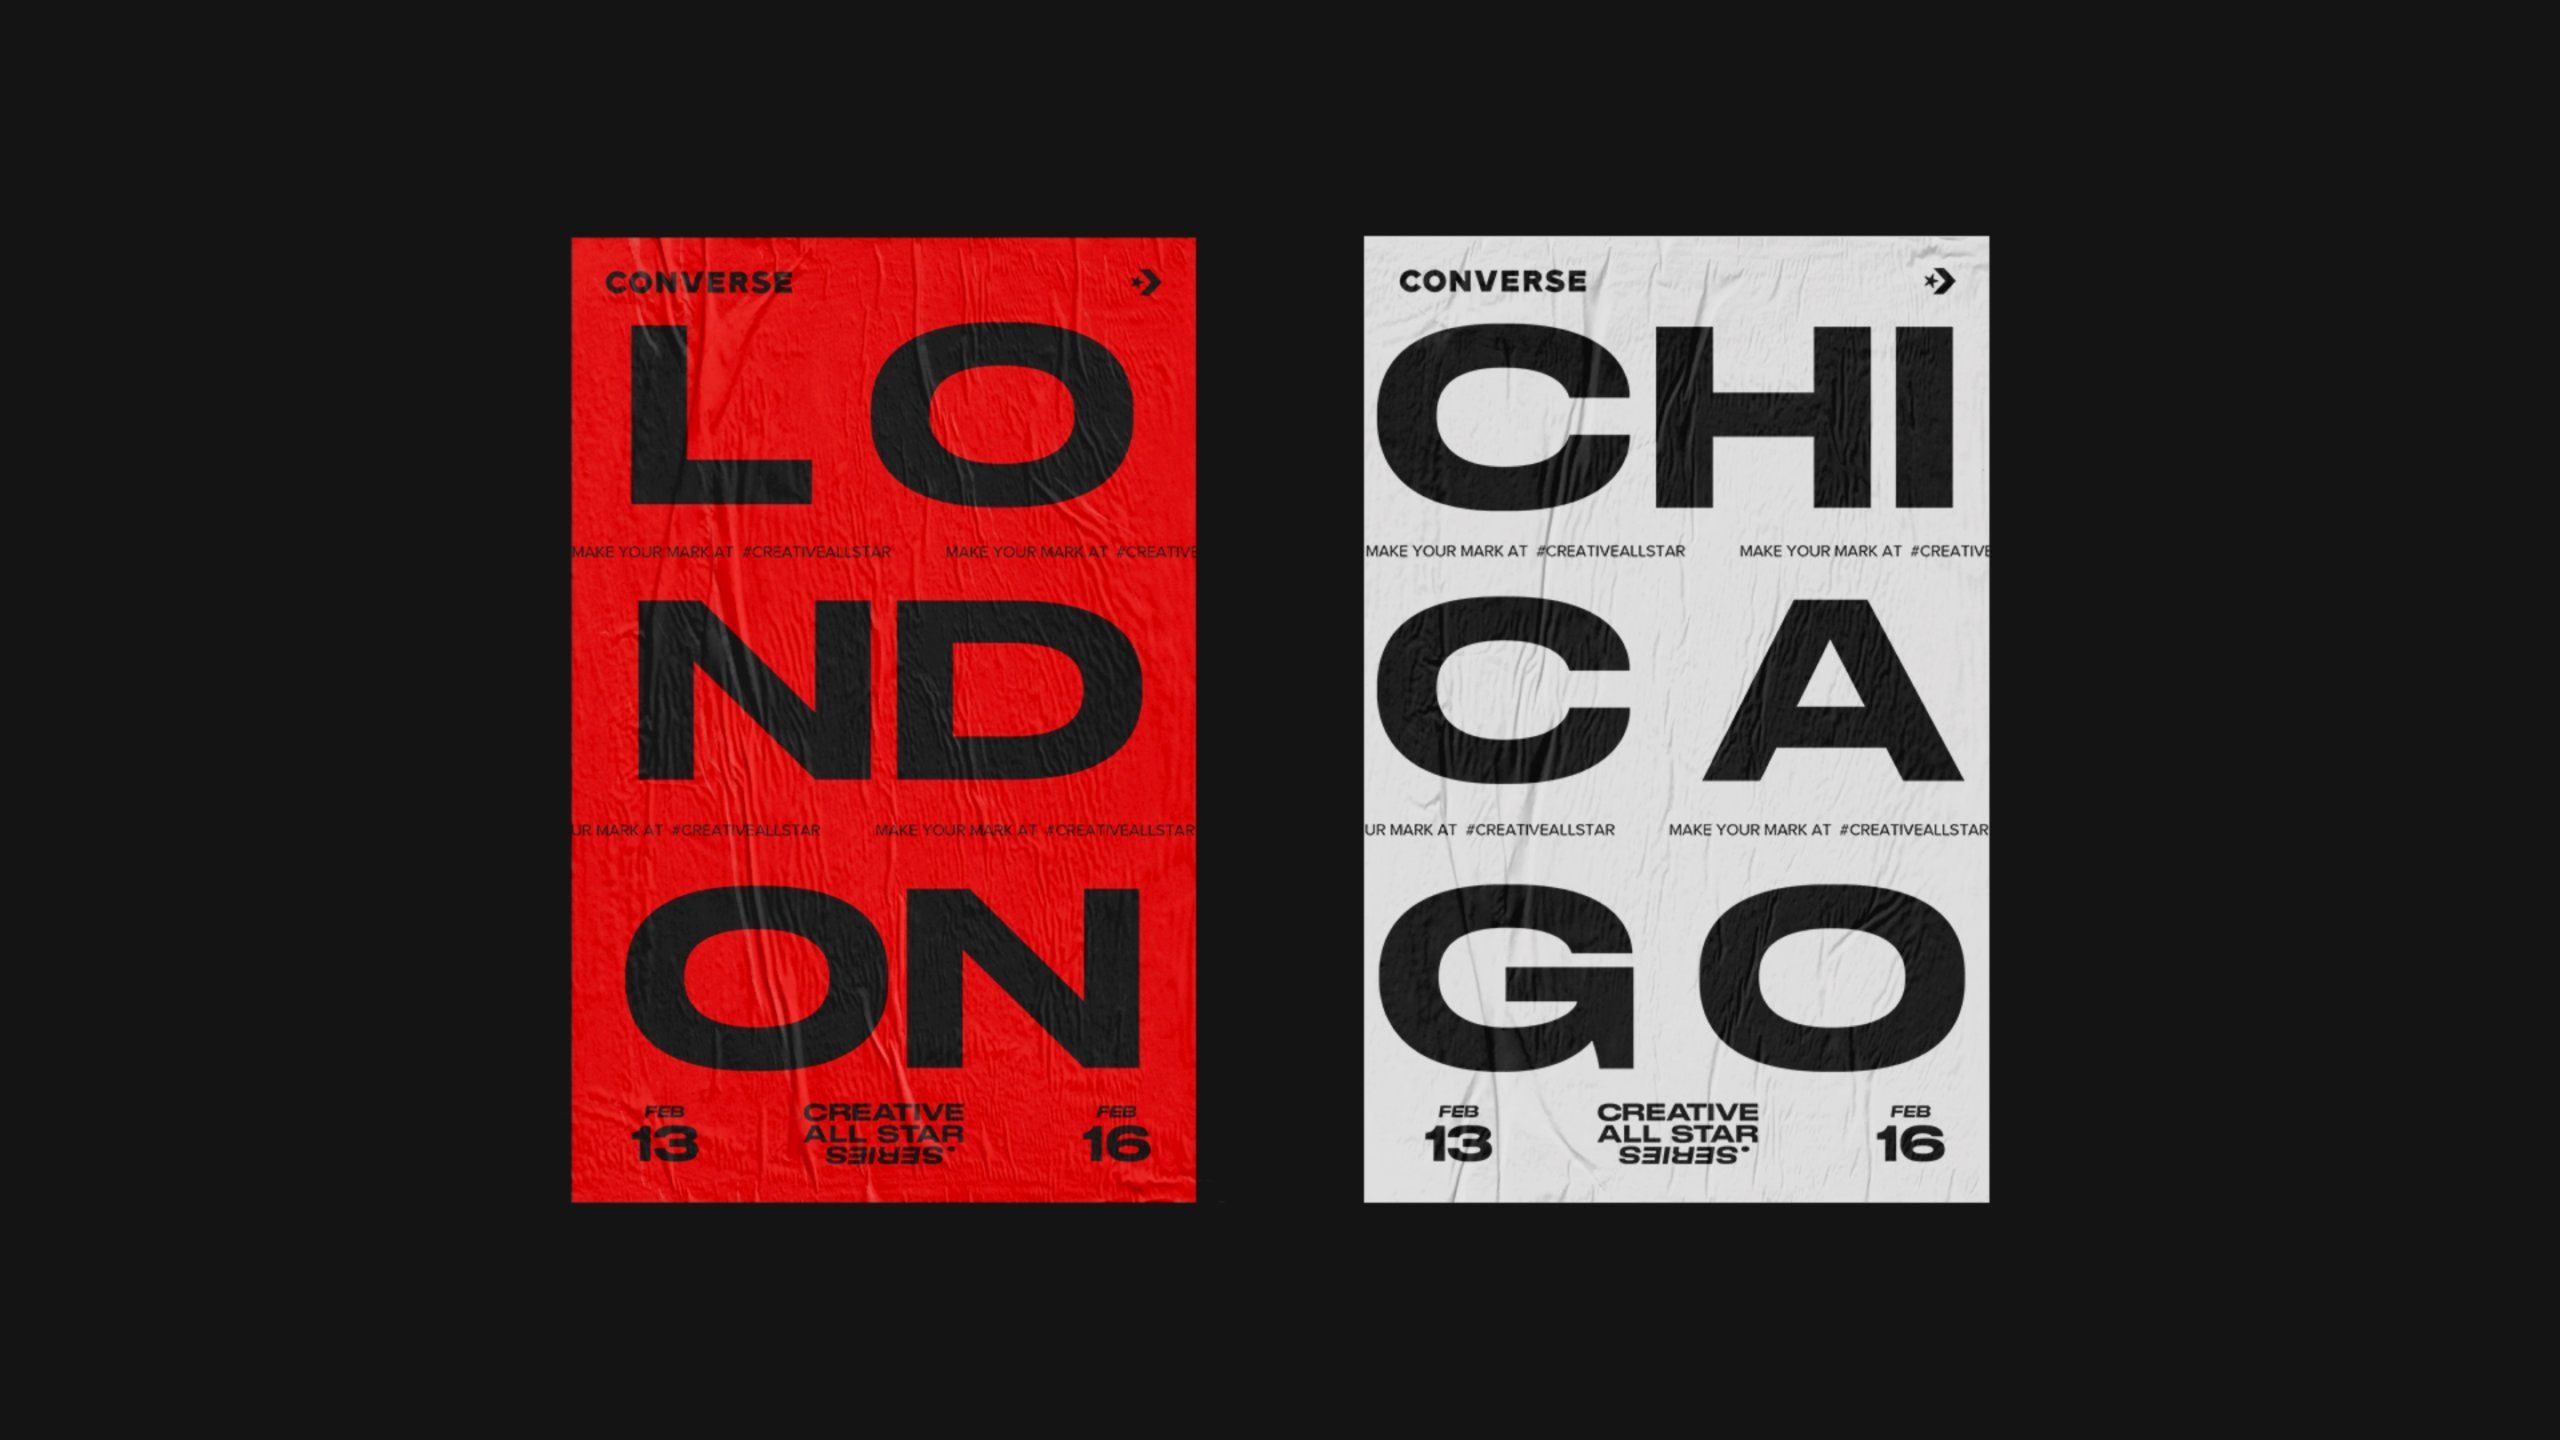 Converse London and Chicago Feb 13 Creative All Star Series Feb 16